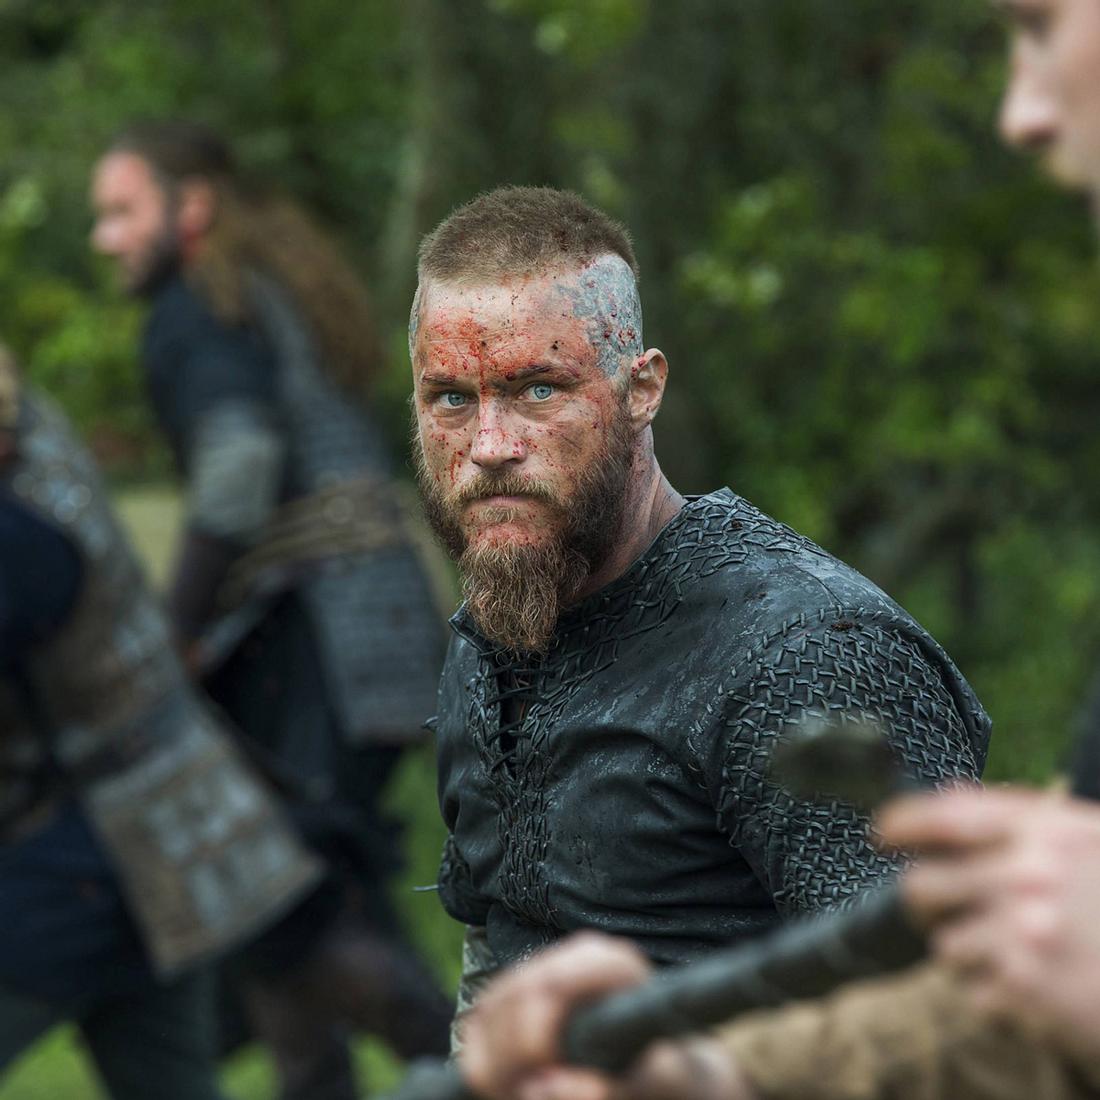 Tod der Hauptfigur: „Vikings“ – Ragnar